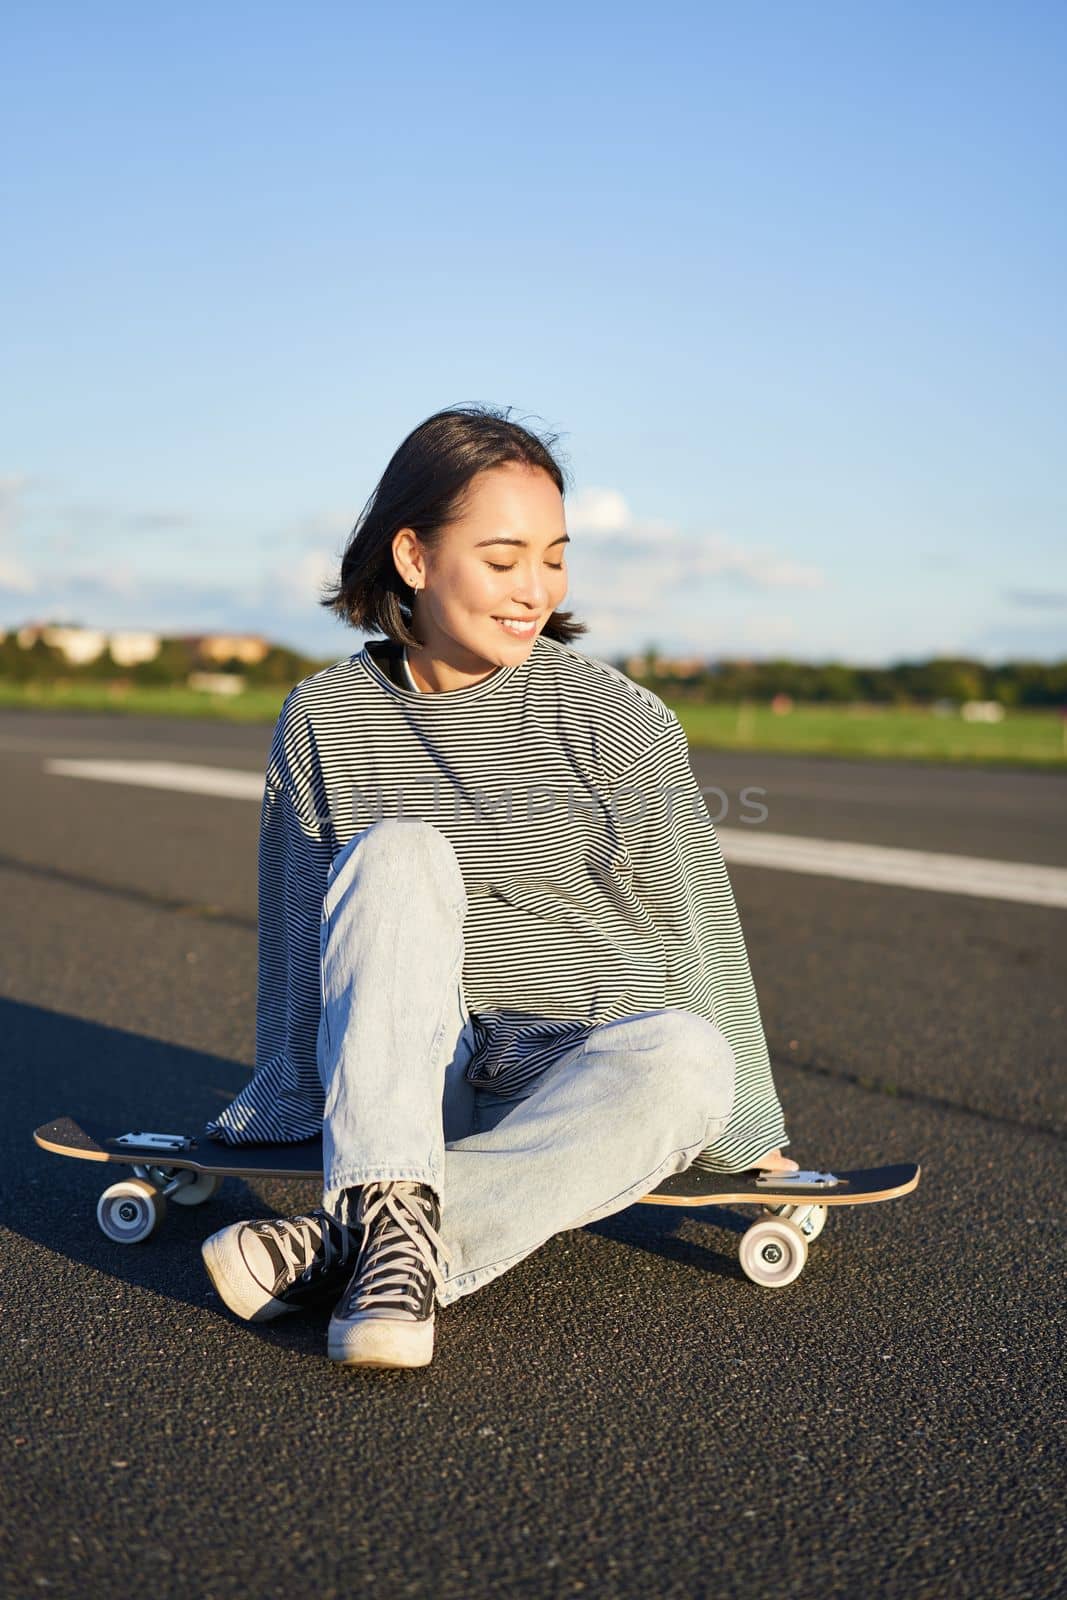 Cute smiling asian girl sits on longboard, skateboarding alone on an empty road. Copy space.